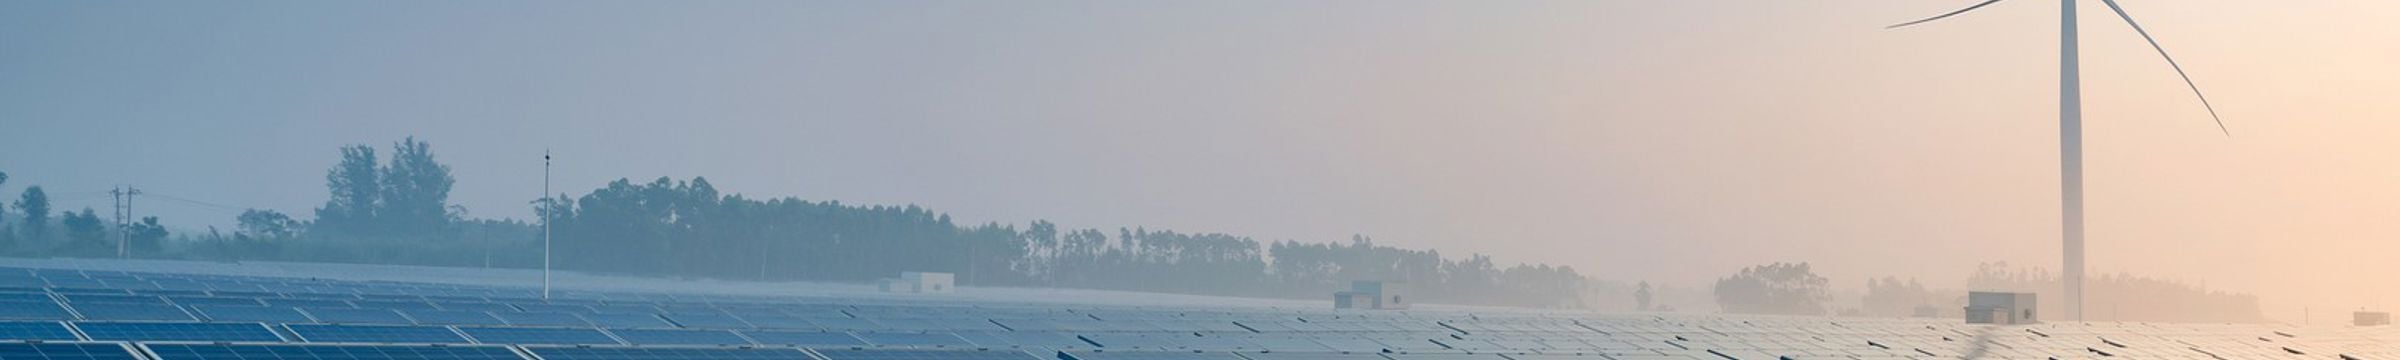 Solar panels, wind turbines 